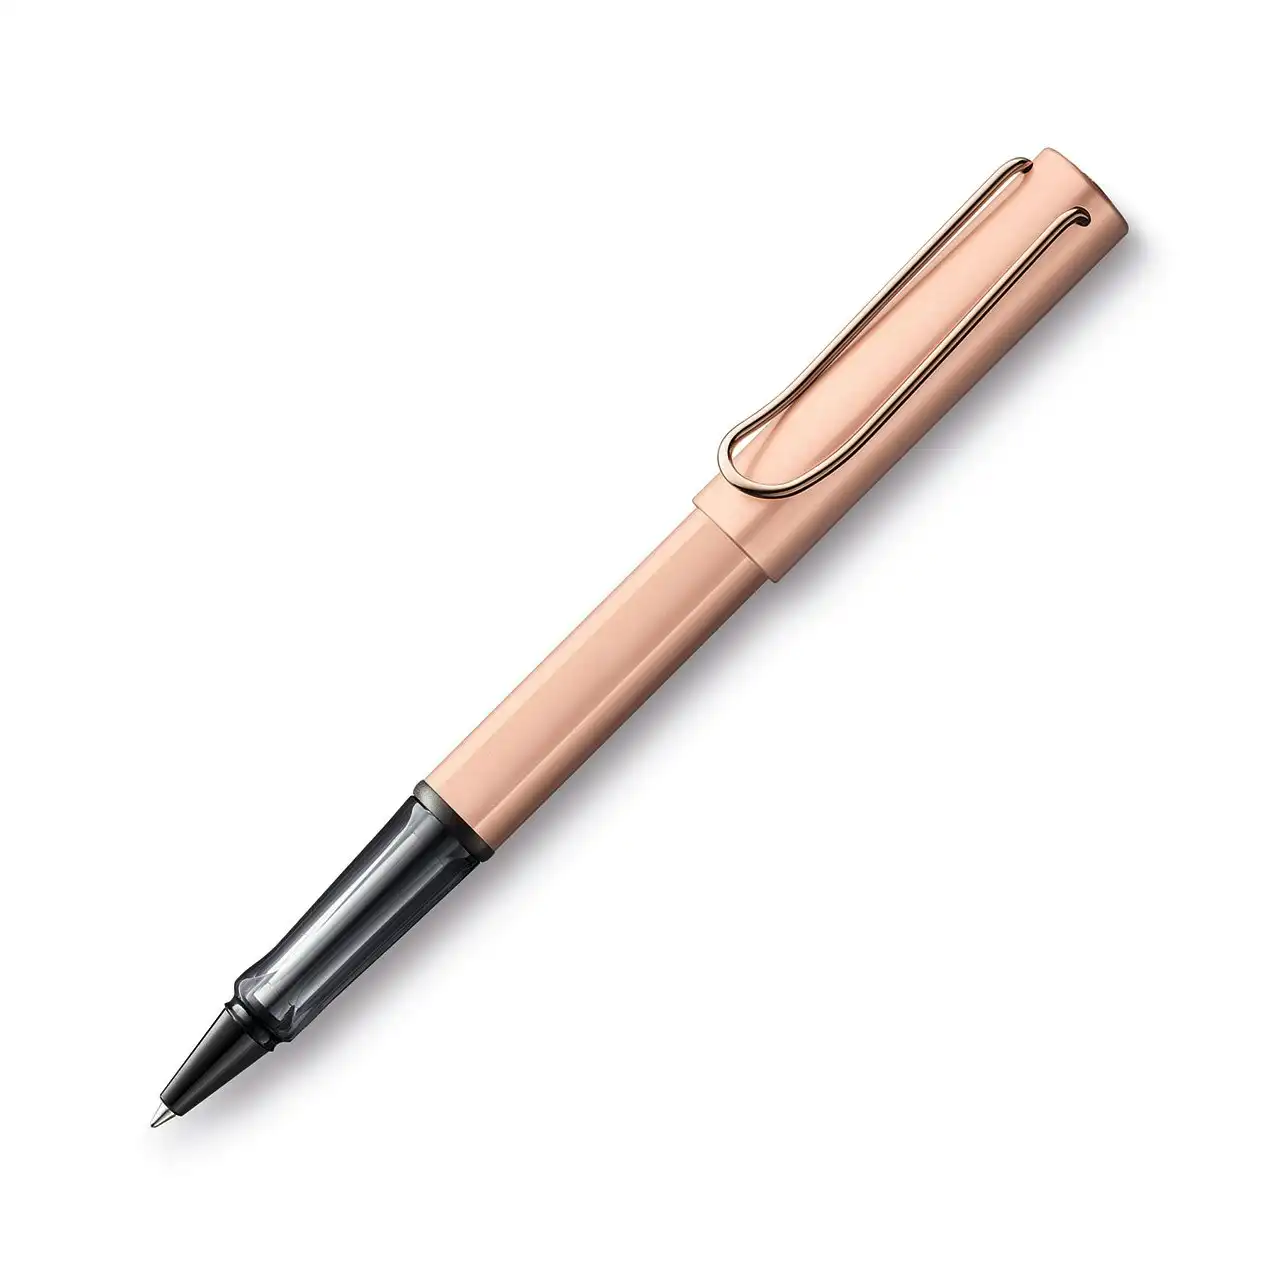 Lamy Lx Anodised Aluminium Light-Weight Stylish Rollerball Writing Pen Rose Gold